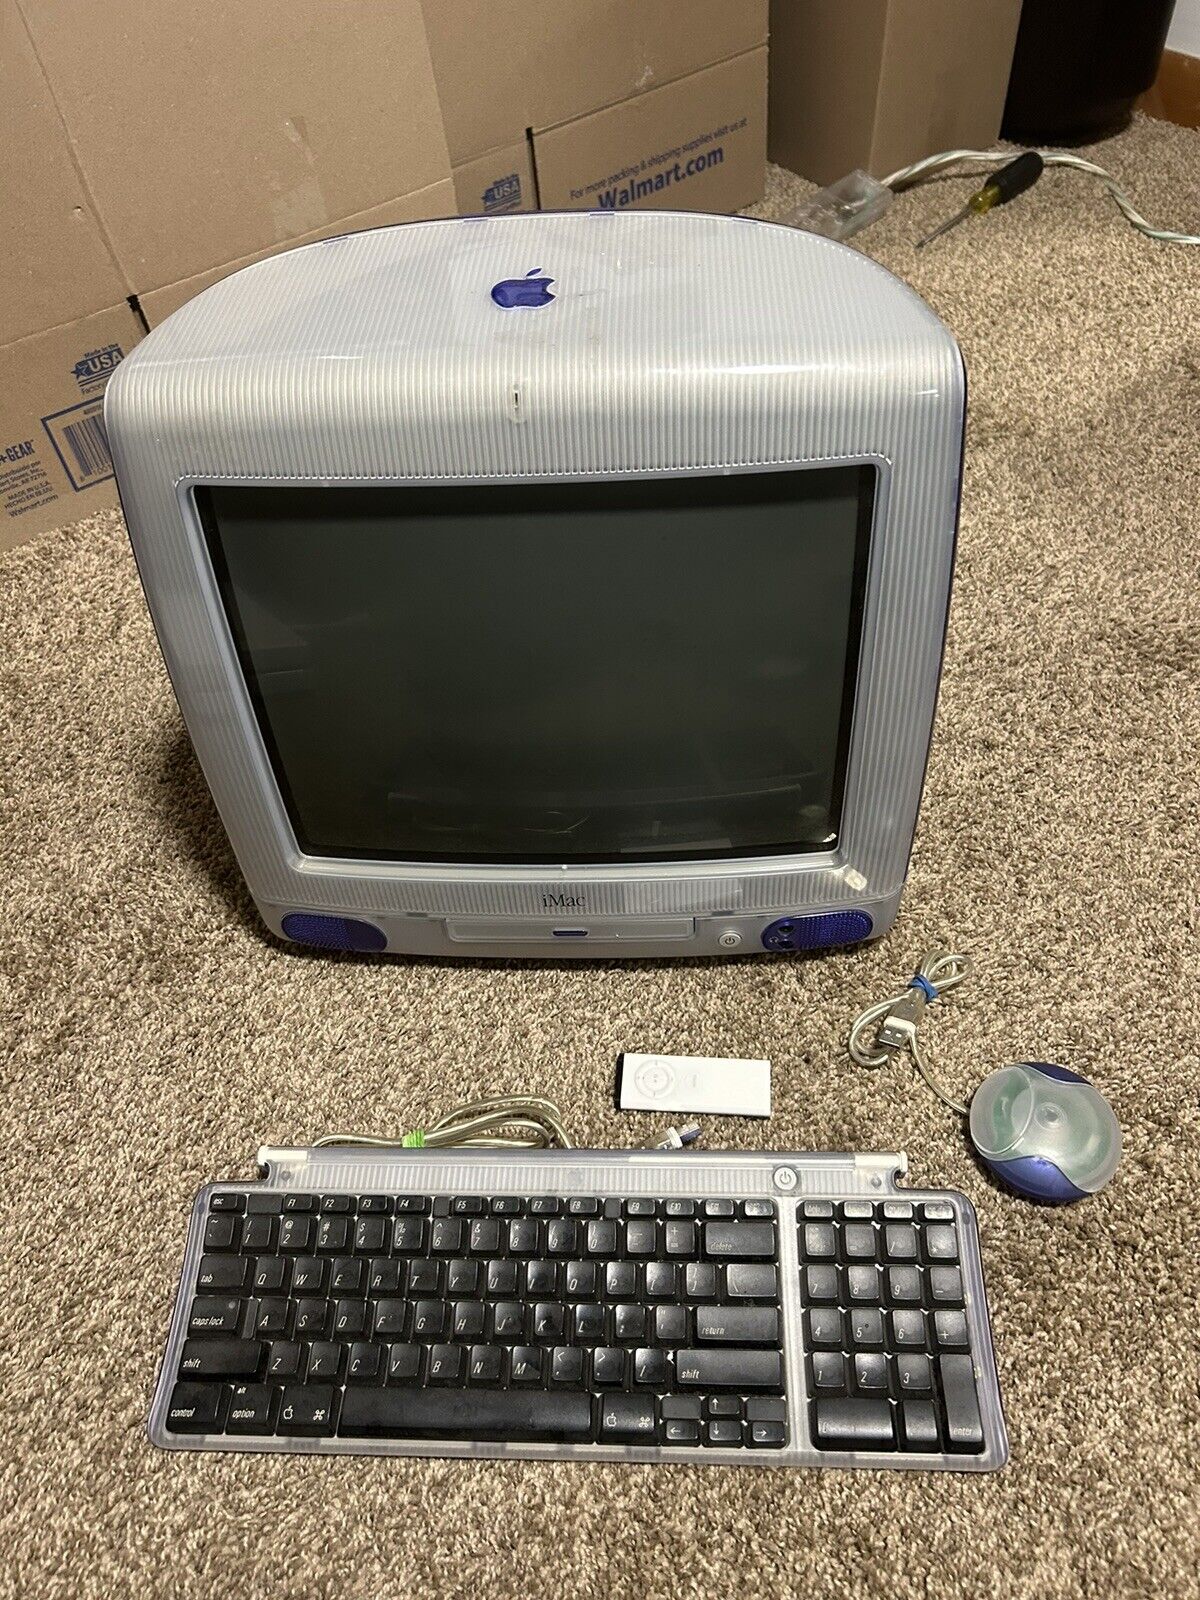 Apple IMac G3 Grape Desktop Computer Tested Matching Input Devices